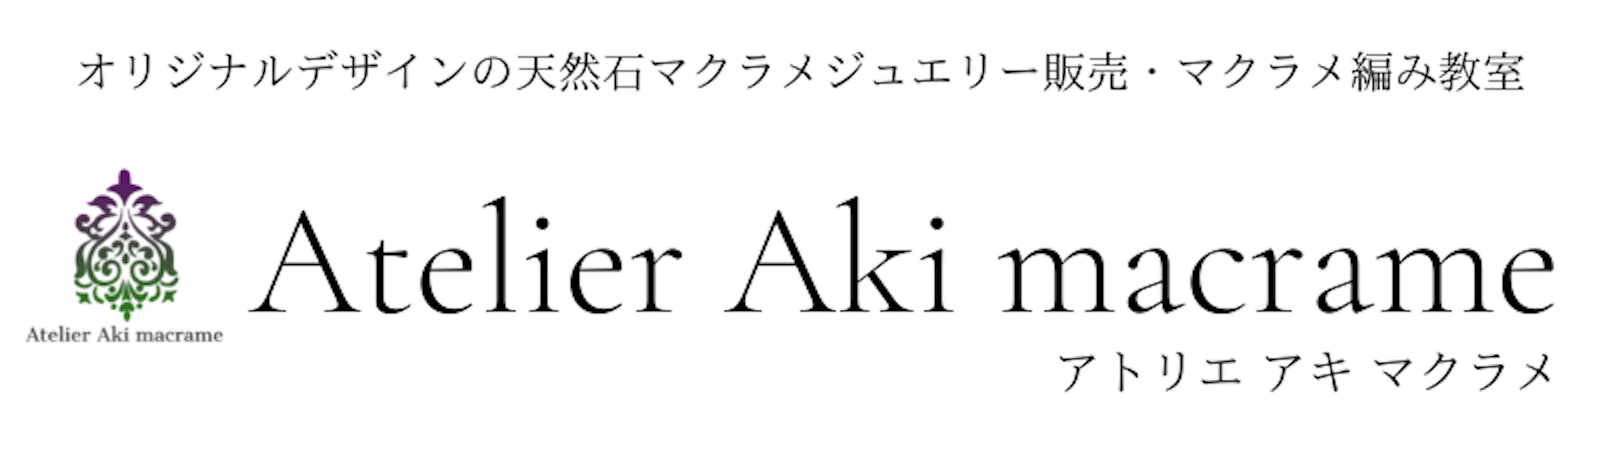 Atelier Aki macrame｜マクラメジュエリー|横浜|天然石のマクラメジュエリーの製作＆販売